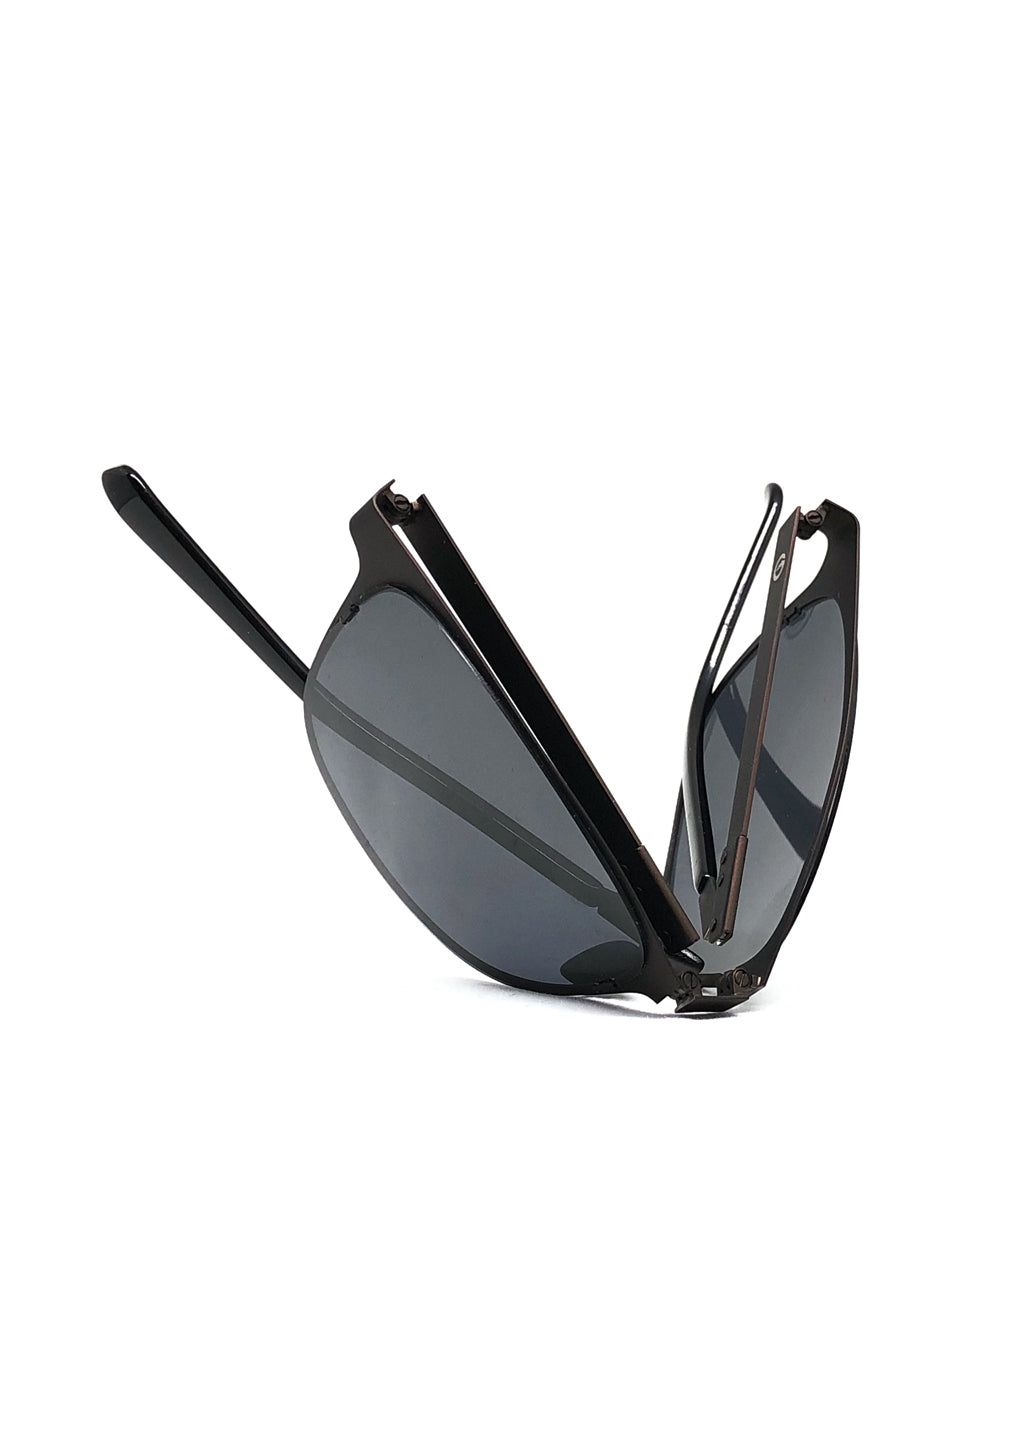 Foldable sunglasses - Rover classic wayfarer design - Folded photo